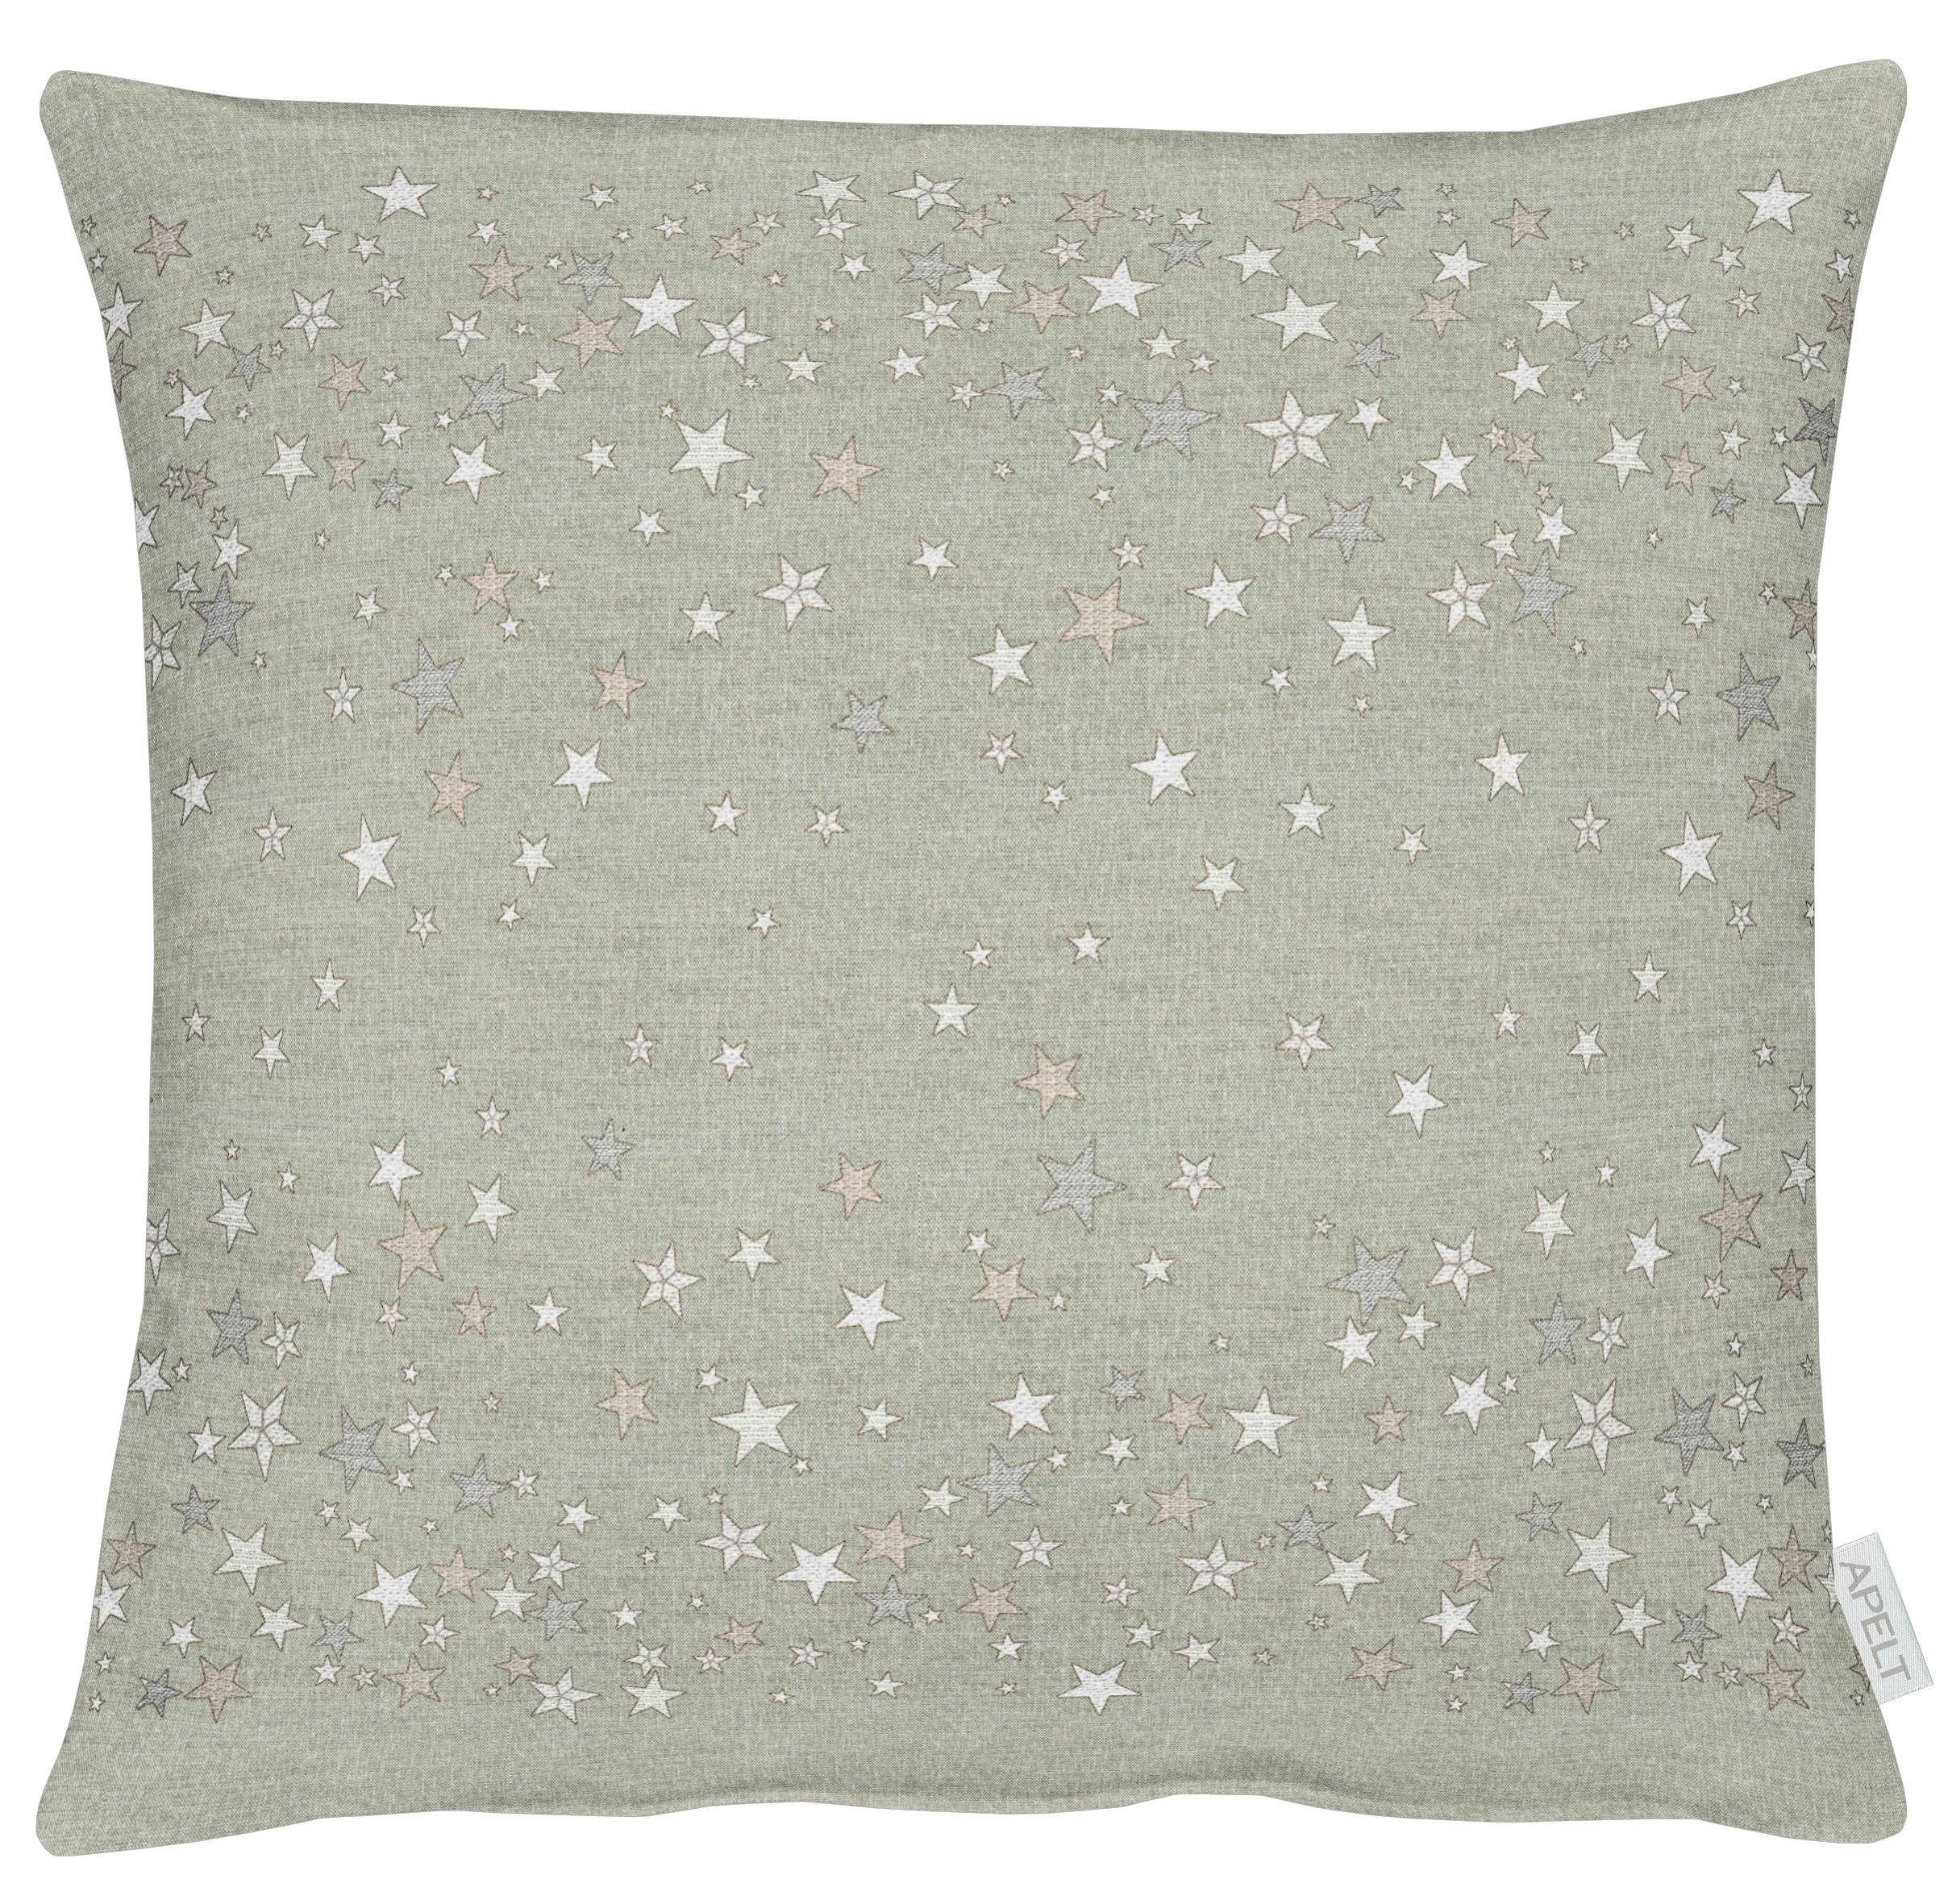 KISSENHÜLLE Christmas Glam  - Taupe, Basics, Textil (49x49cm) - X-Mas